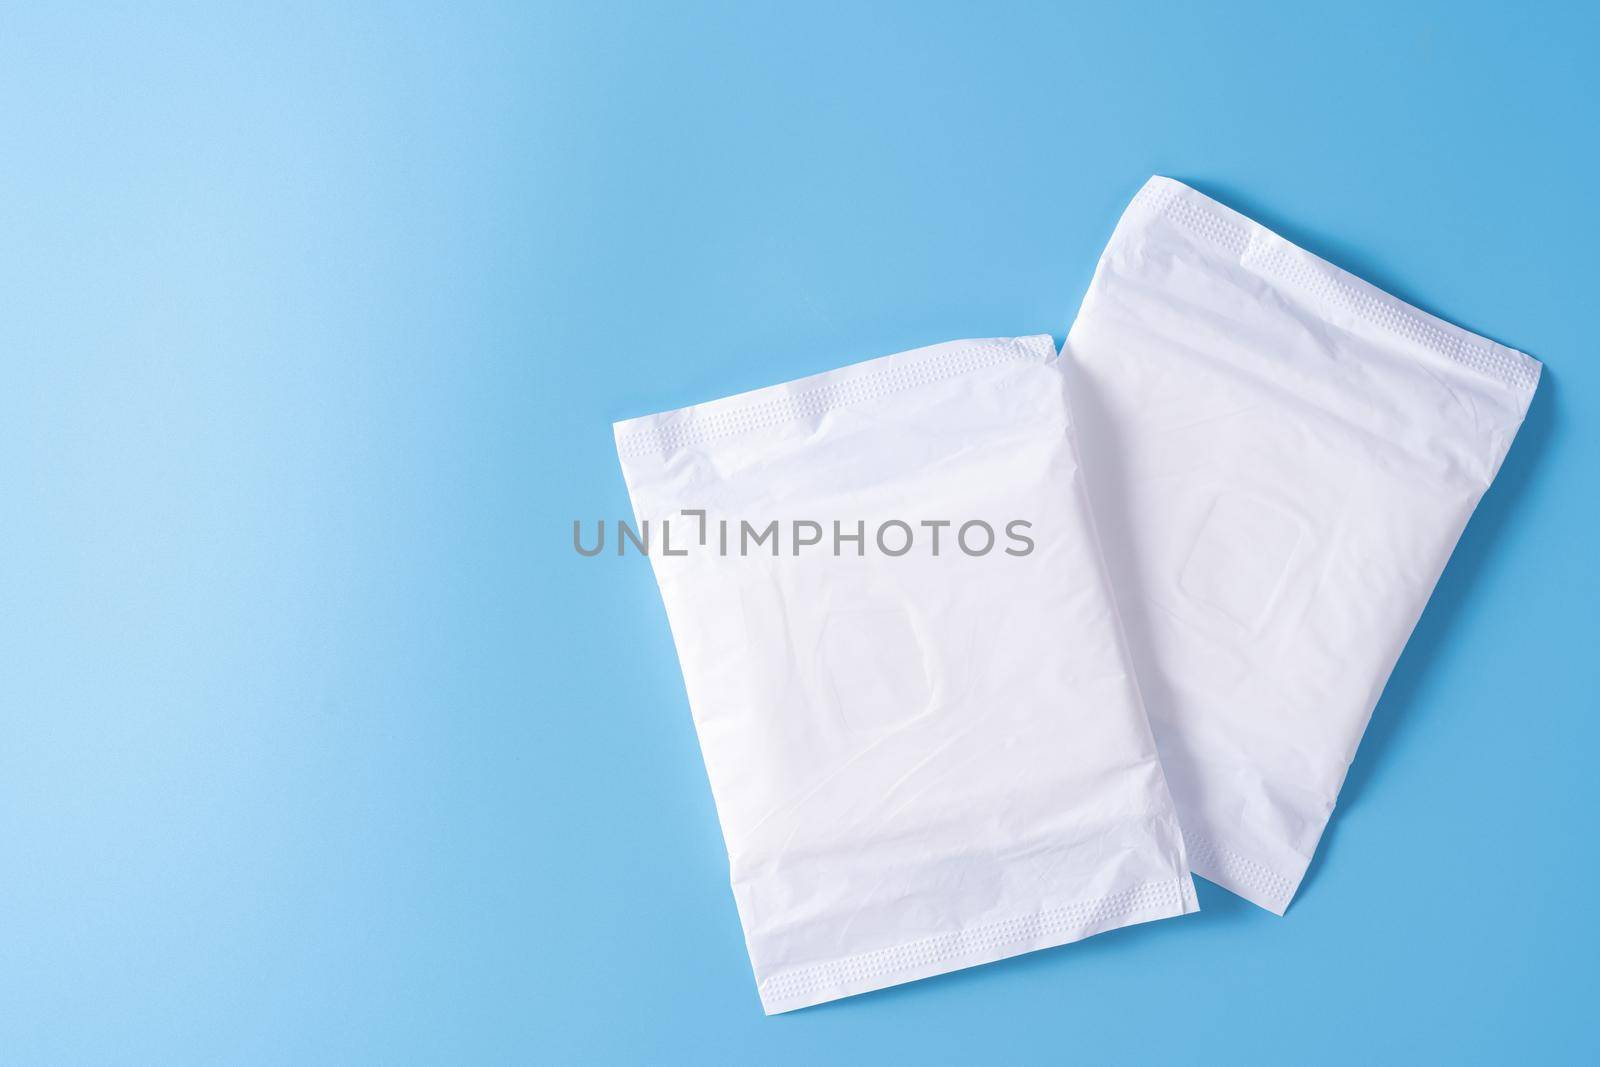 Sanitary pad, Sanitary napkin on blue background. Menstruation, Feminine hygiene, top view.